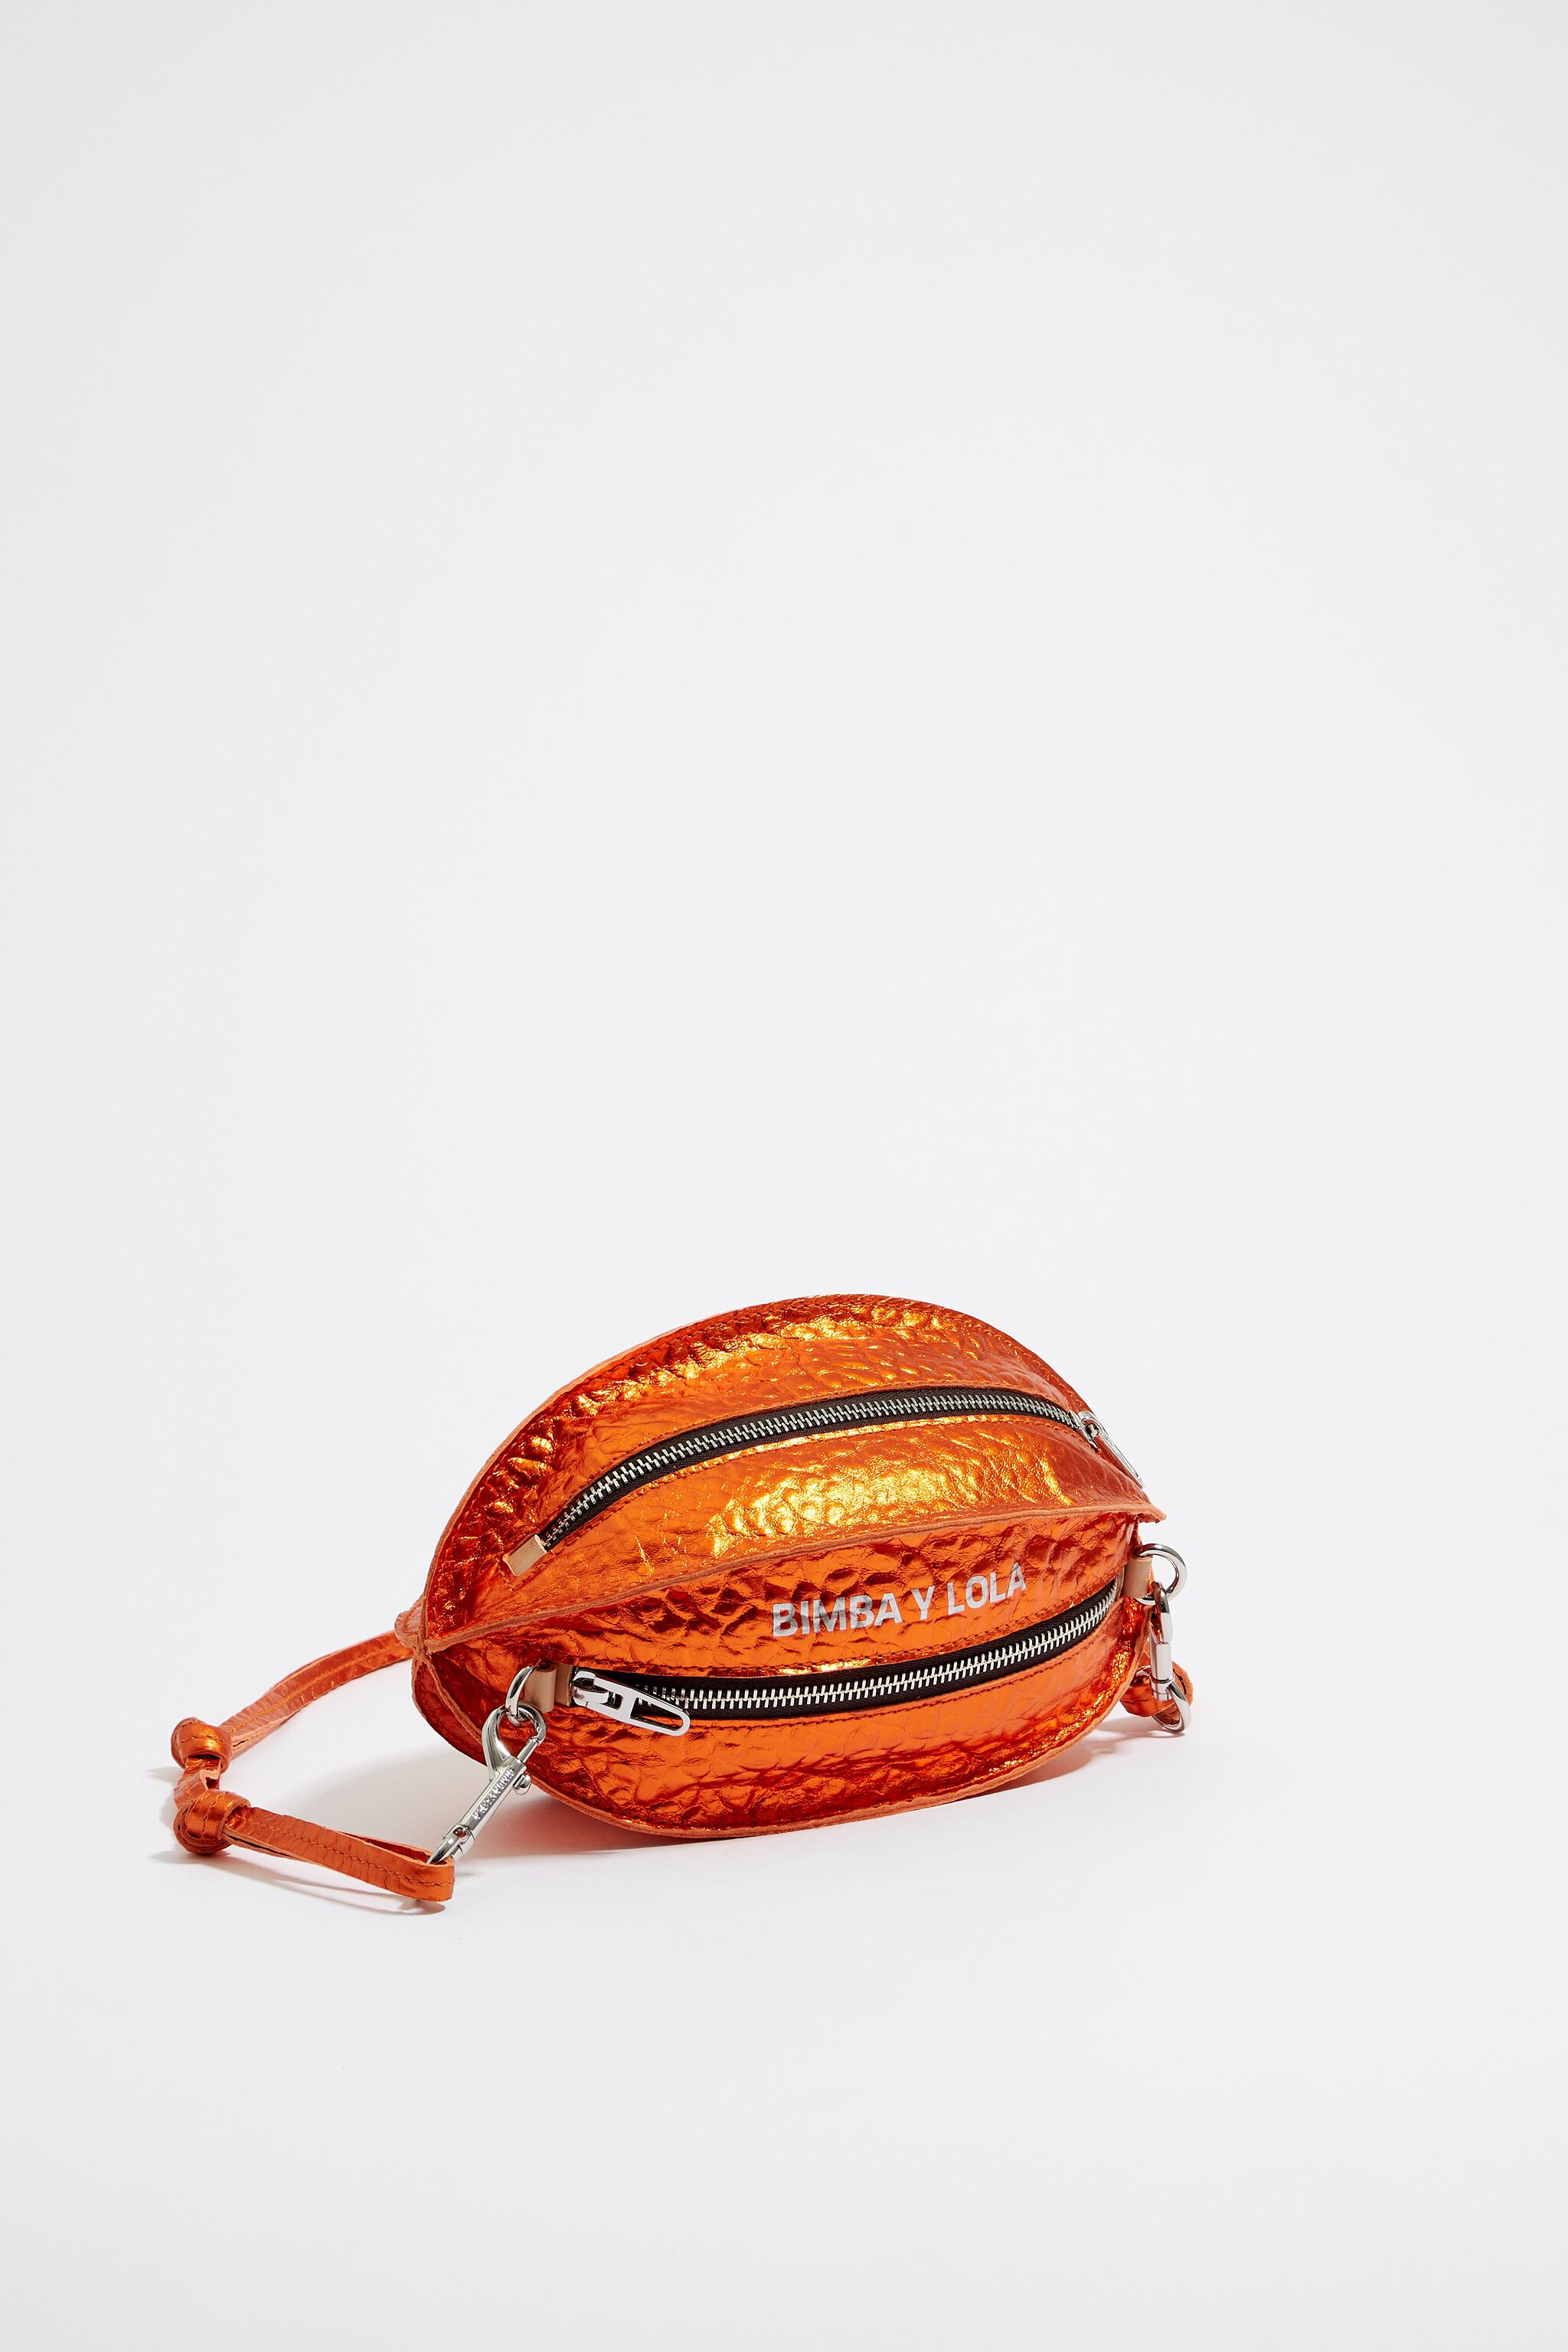 S metallic orange leather Pelota bag